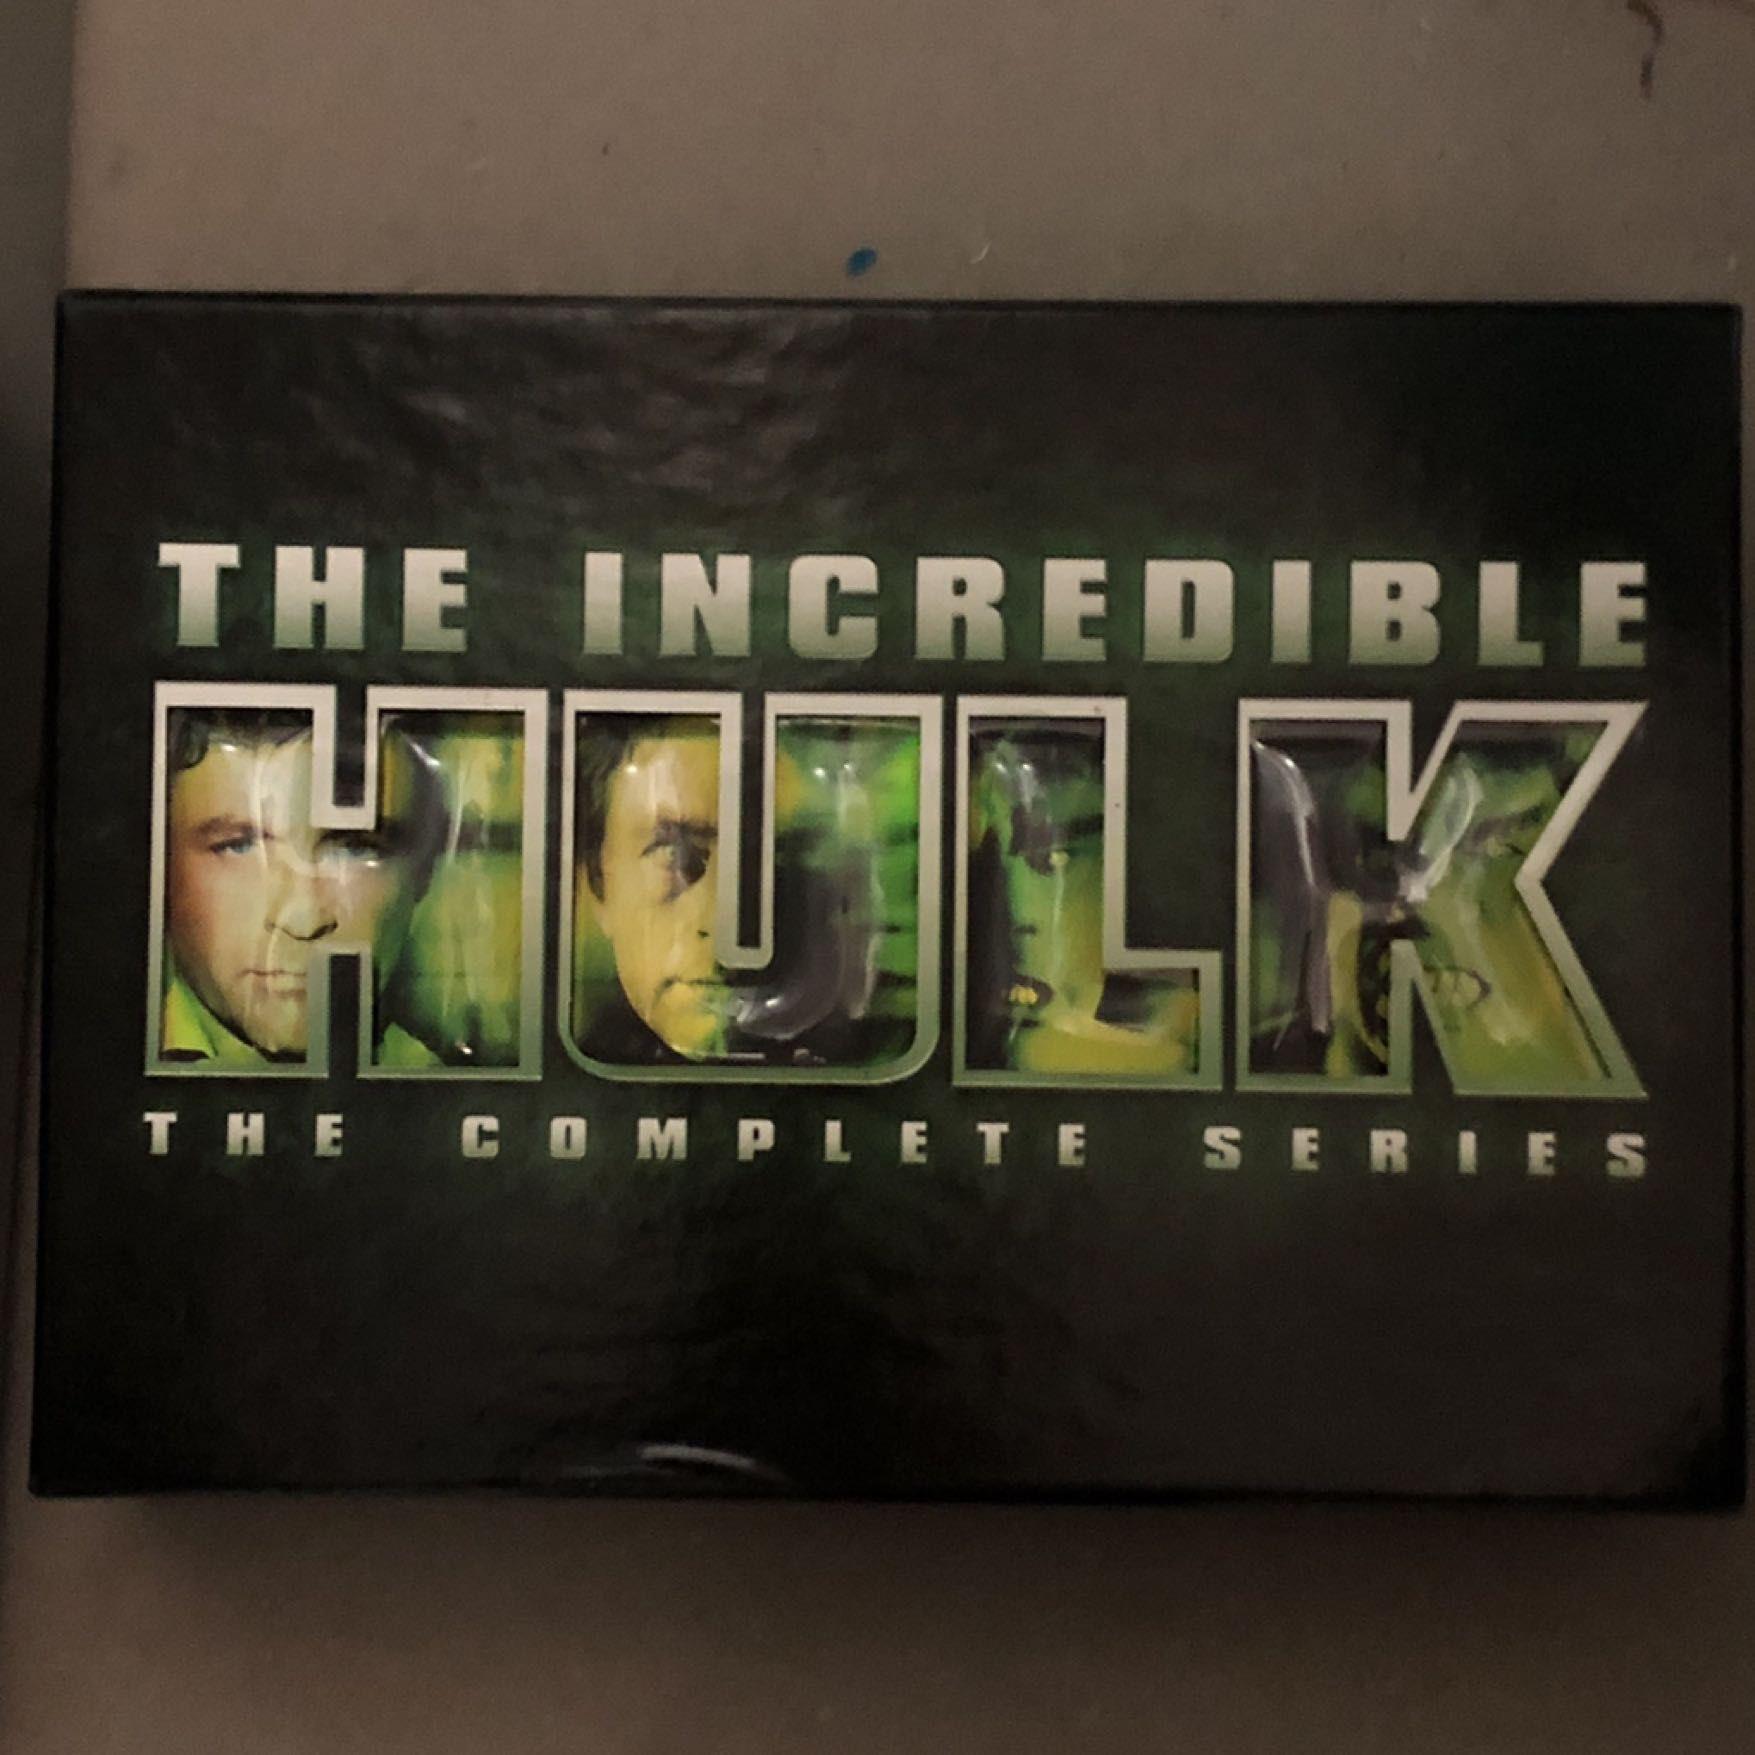 L'Incroyable Hulk - Intégrale de la série TV - Coffret 23 DVD, Bill Bixby -  les Prix d'Occasion ou Neuf